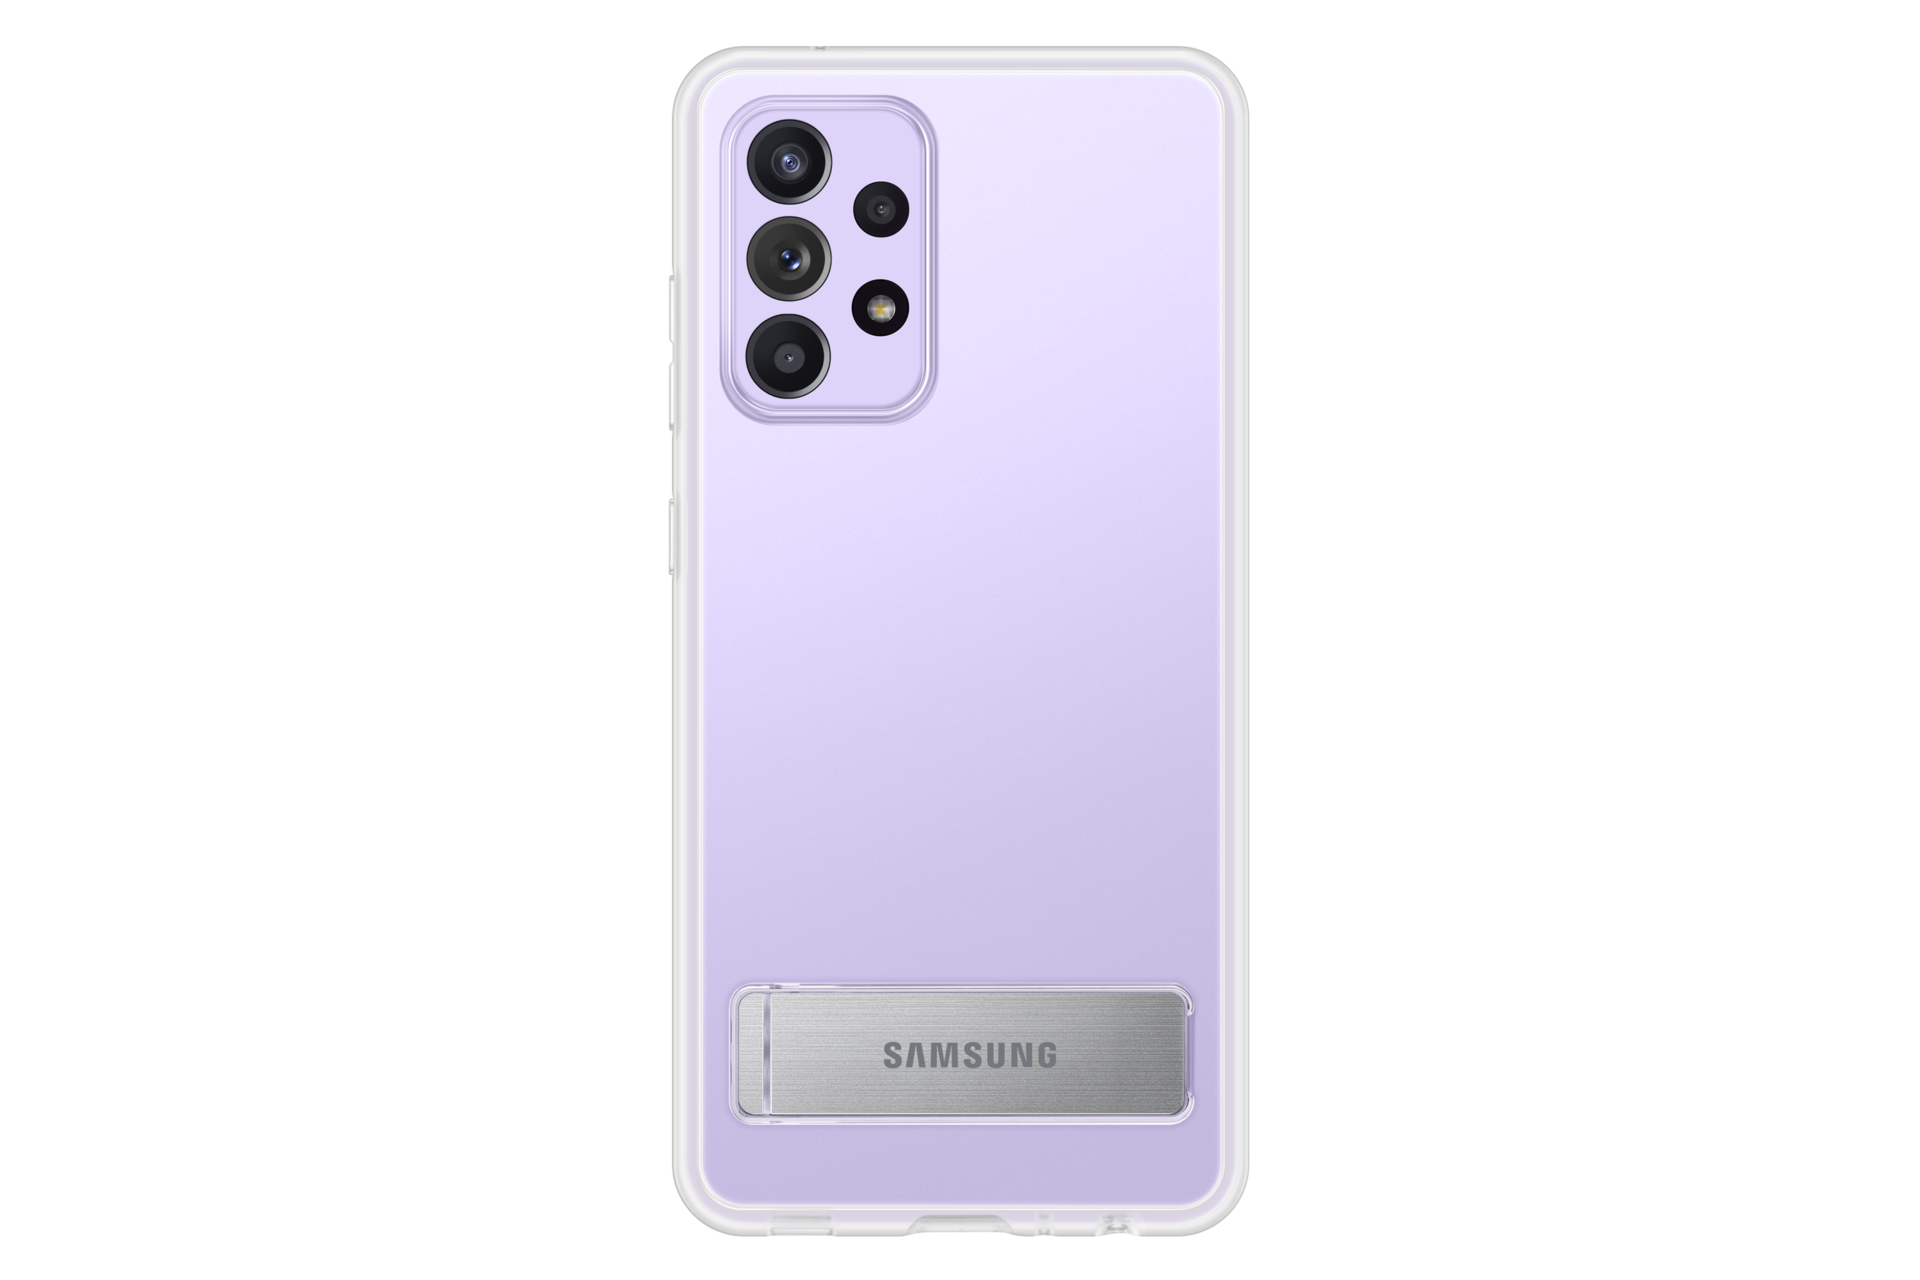 Samsung A52s 5G cover clear transparan asli. Beli casing Samsung A52s 5G clear case orisinal harga terbaik di Samsung Indonesia.